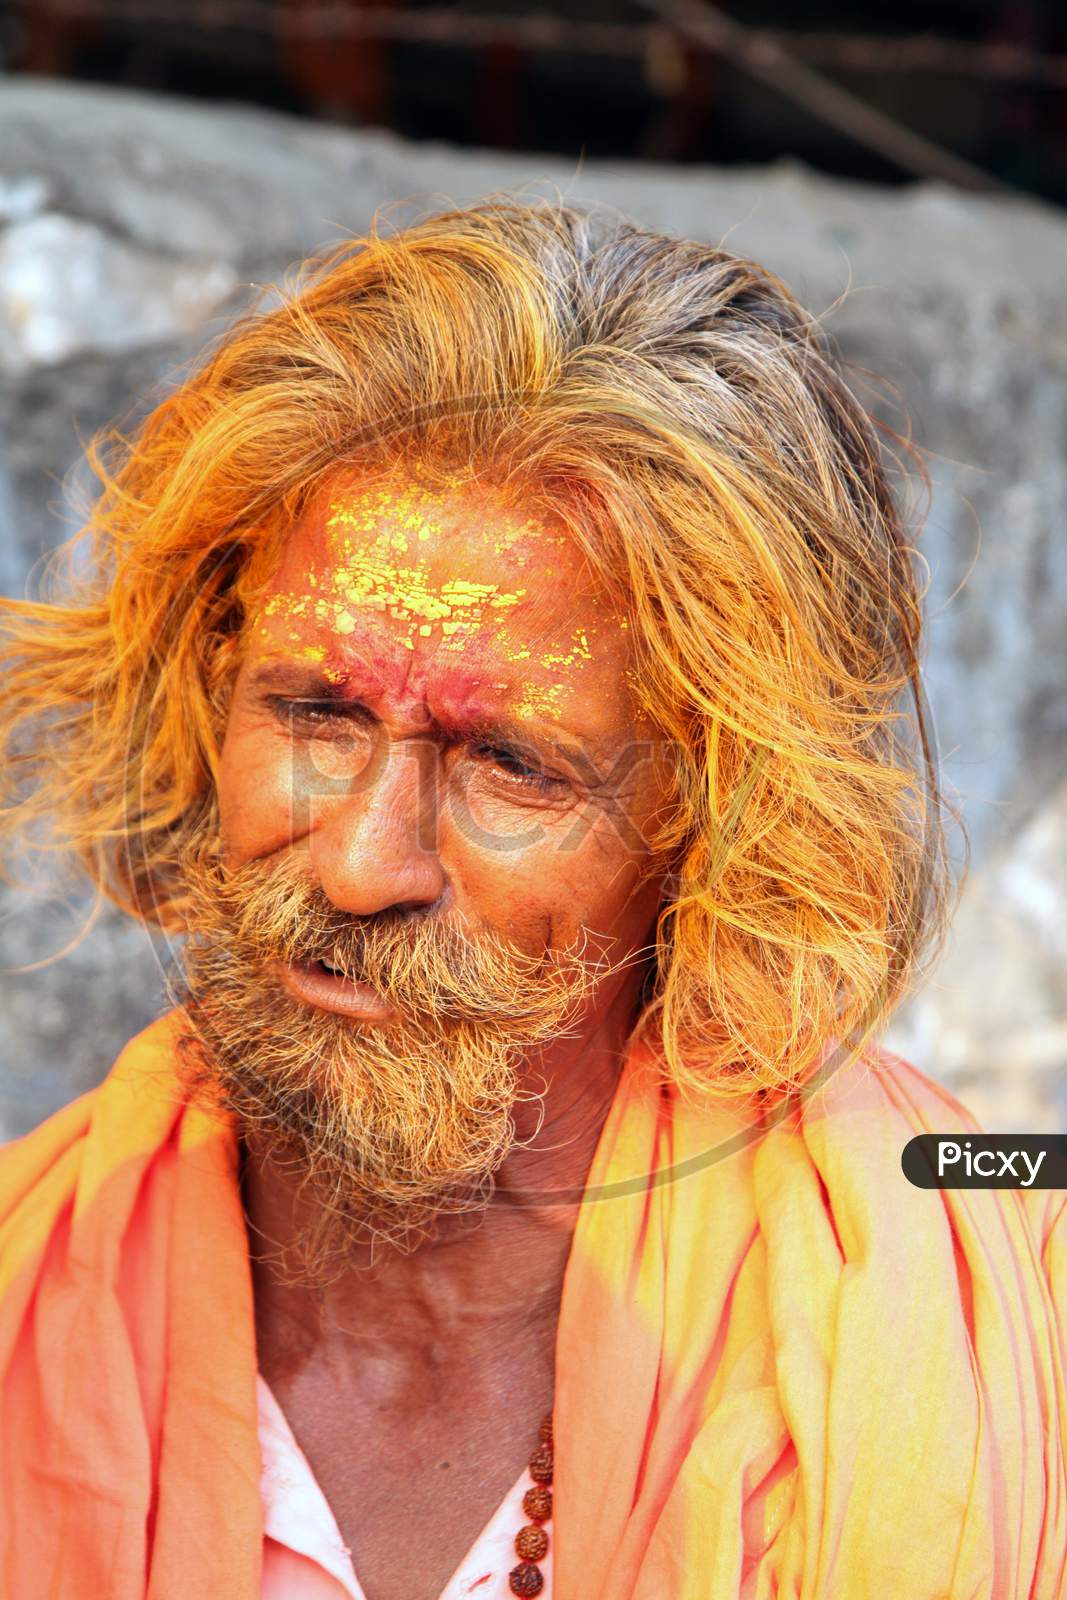 Portrait of an Indian Hindu Sadhu or Baba